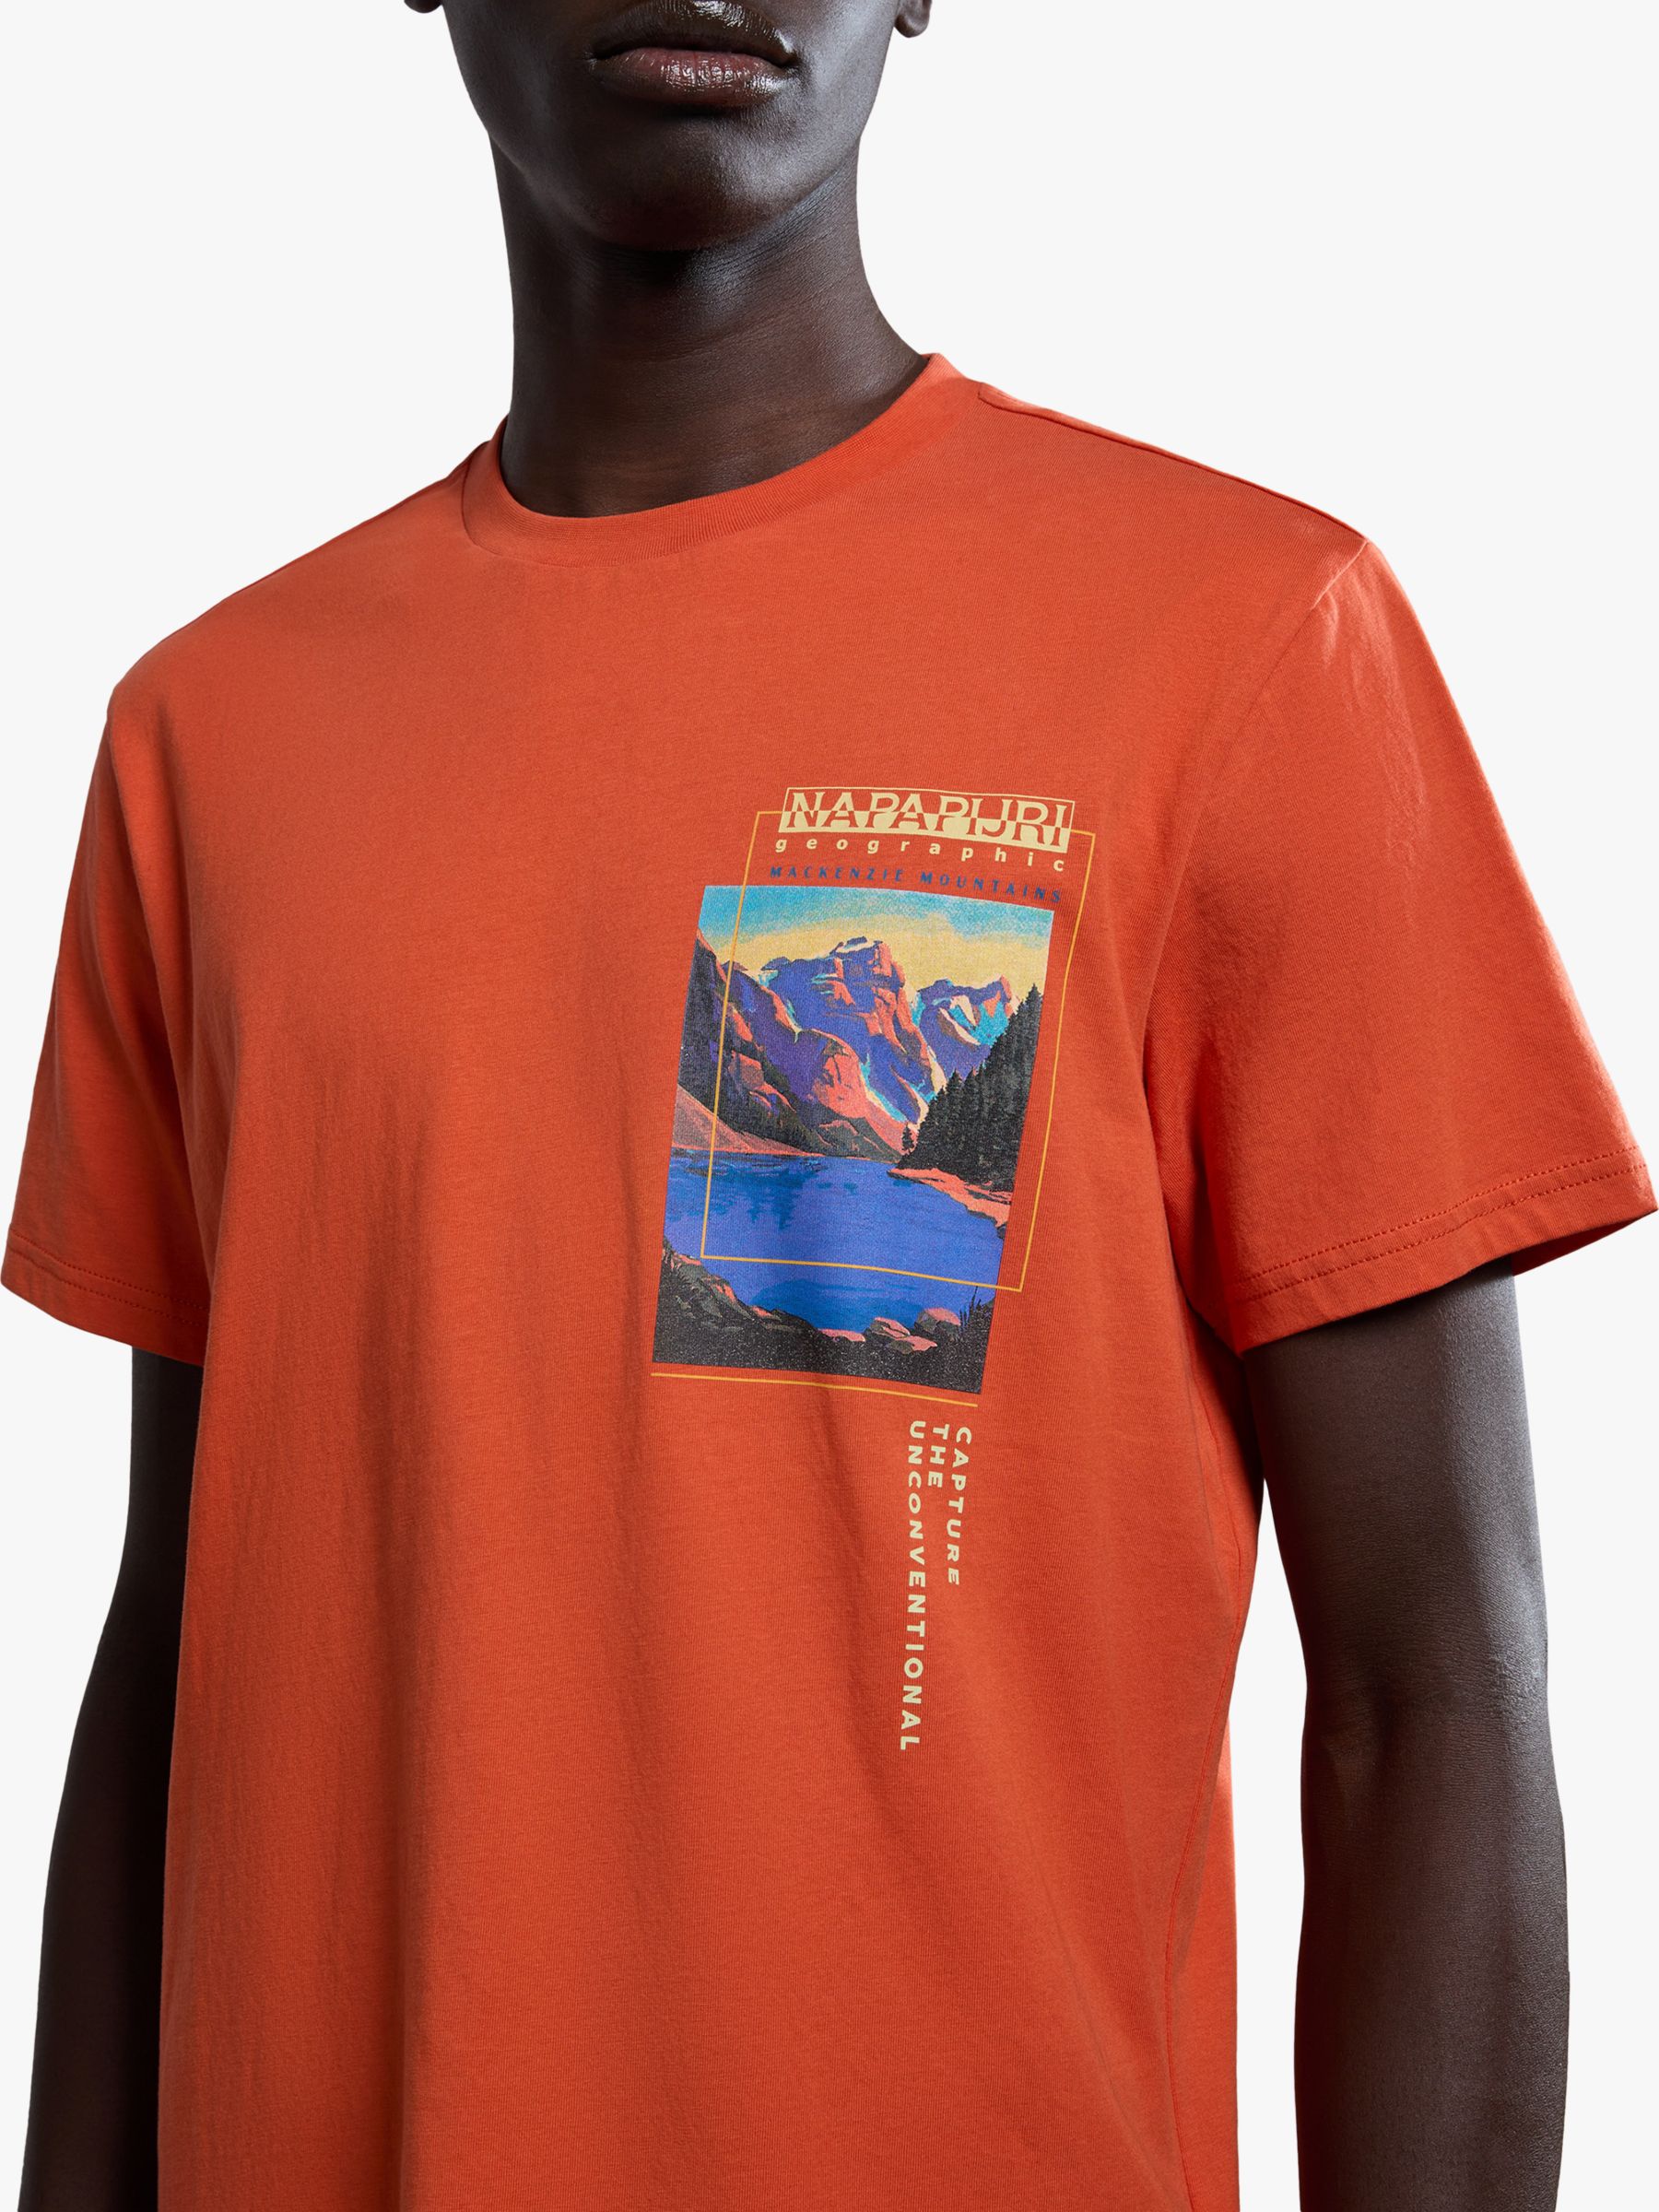 Napapijri Canada Short Sleeve T-Shirt, Orange, XL